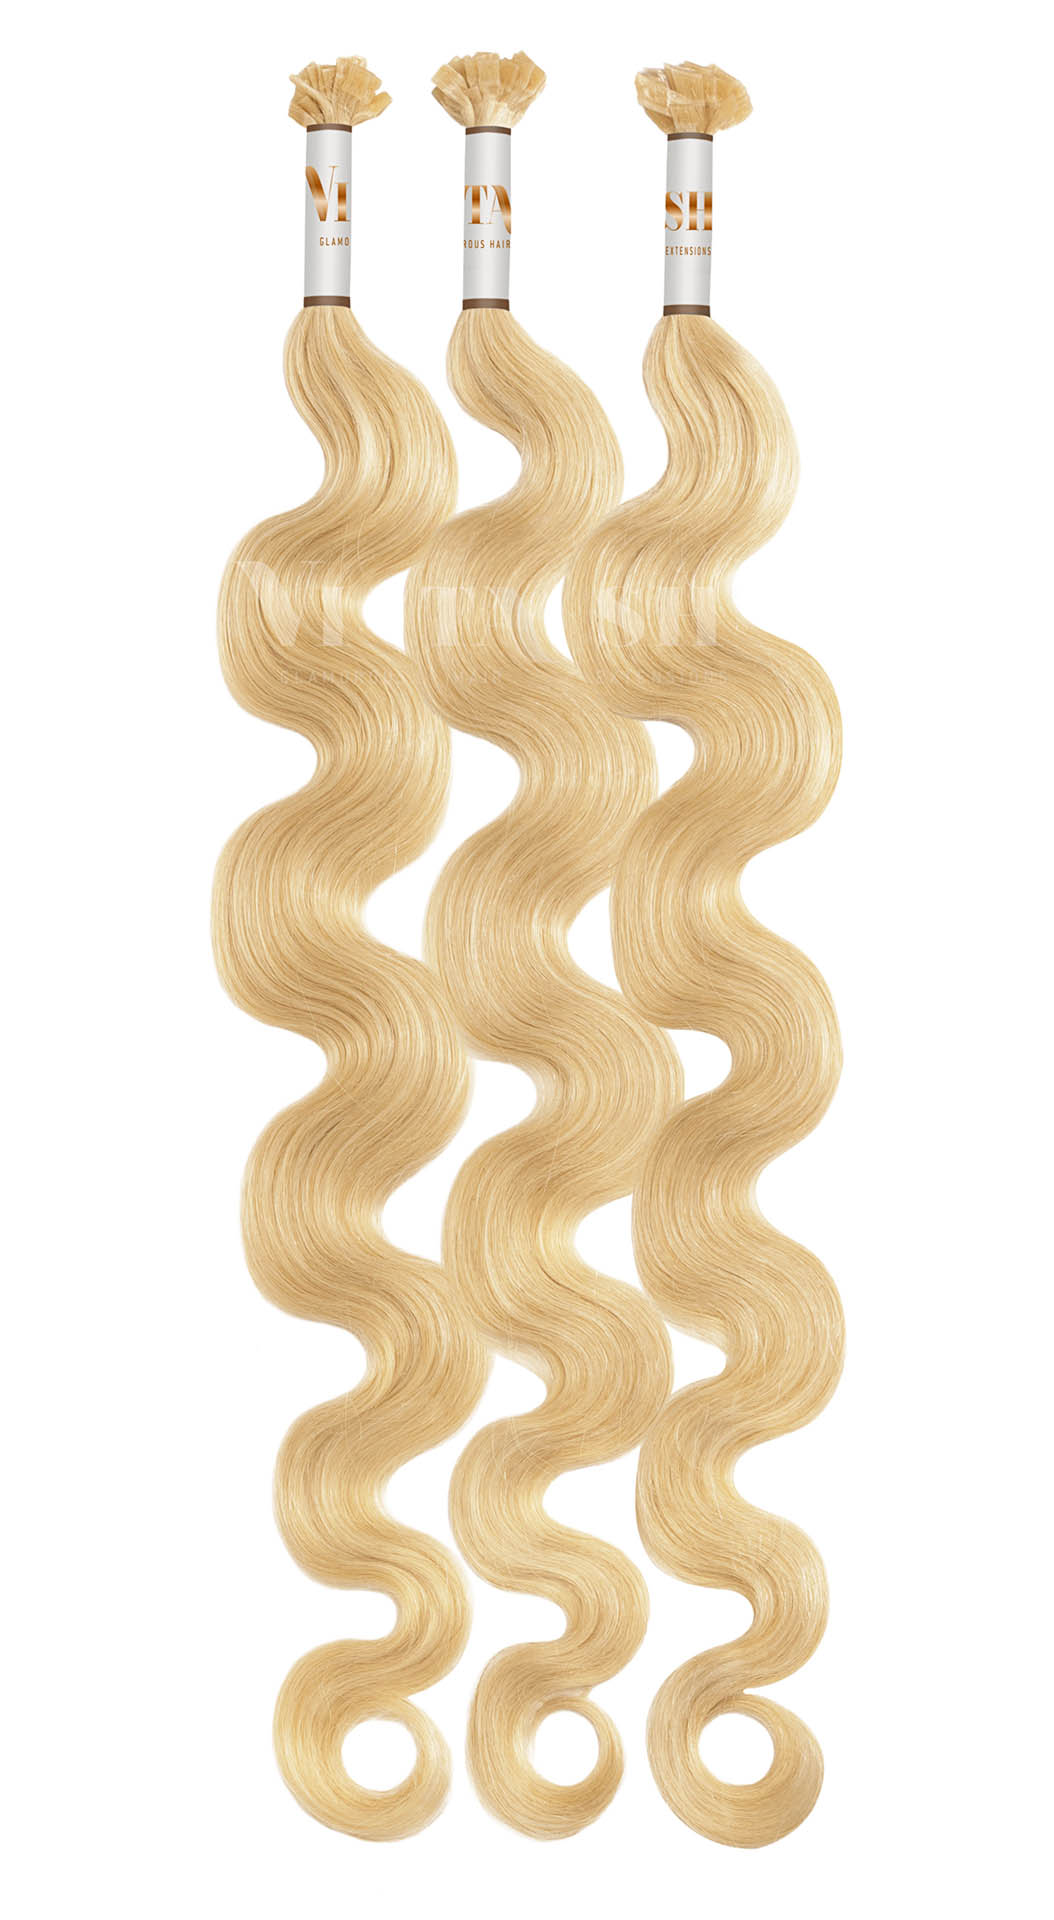 25 REMY Keratin Bonding Extensions Haarverlaengerung Leicht gewellt Farbe Honigblond Schokobraun | Vitash